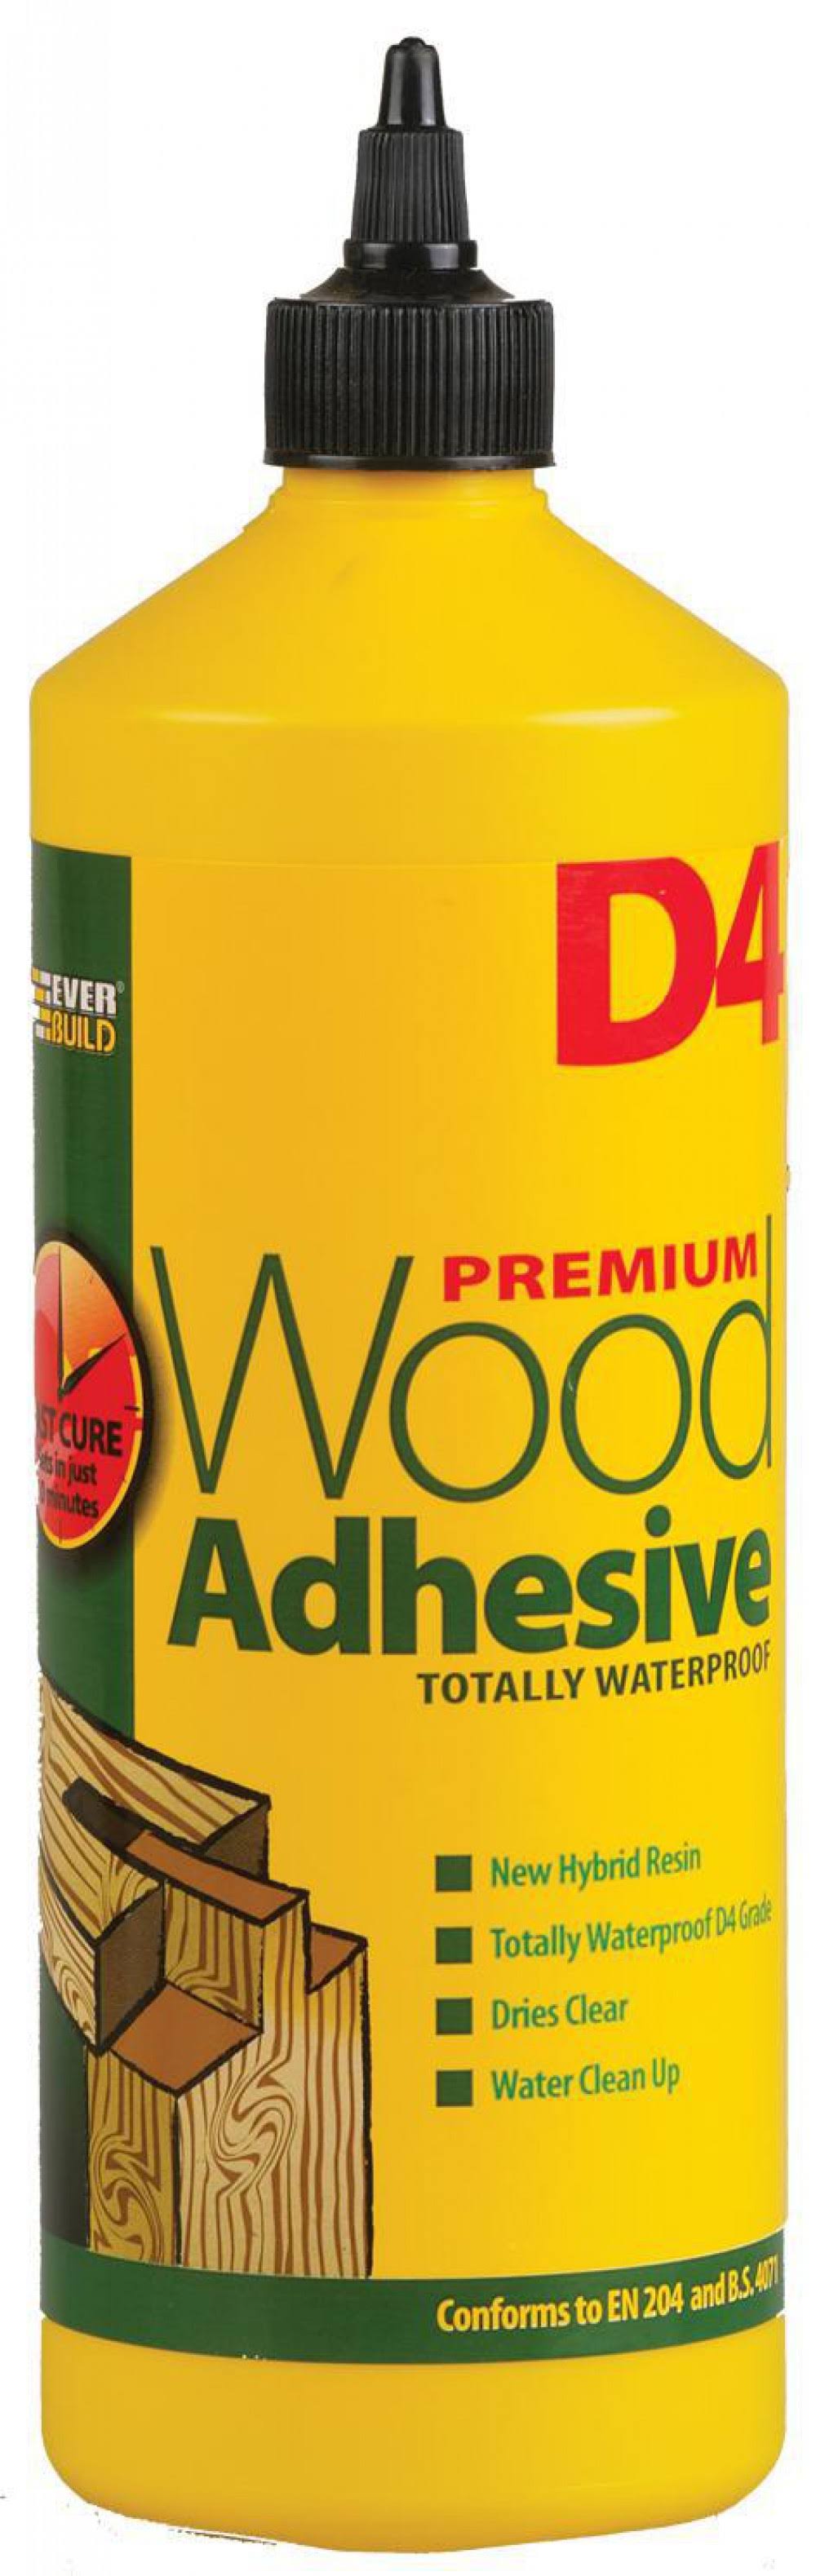 Everbuild Premium D4 Industrial Grade Wood Adhesive - 1L